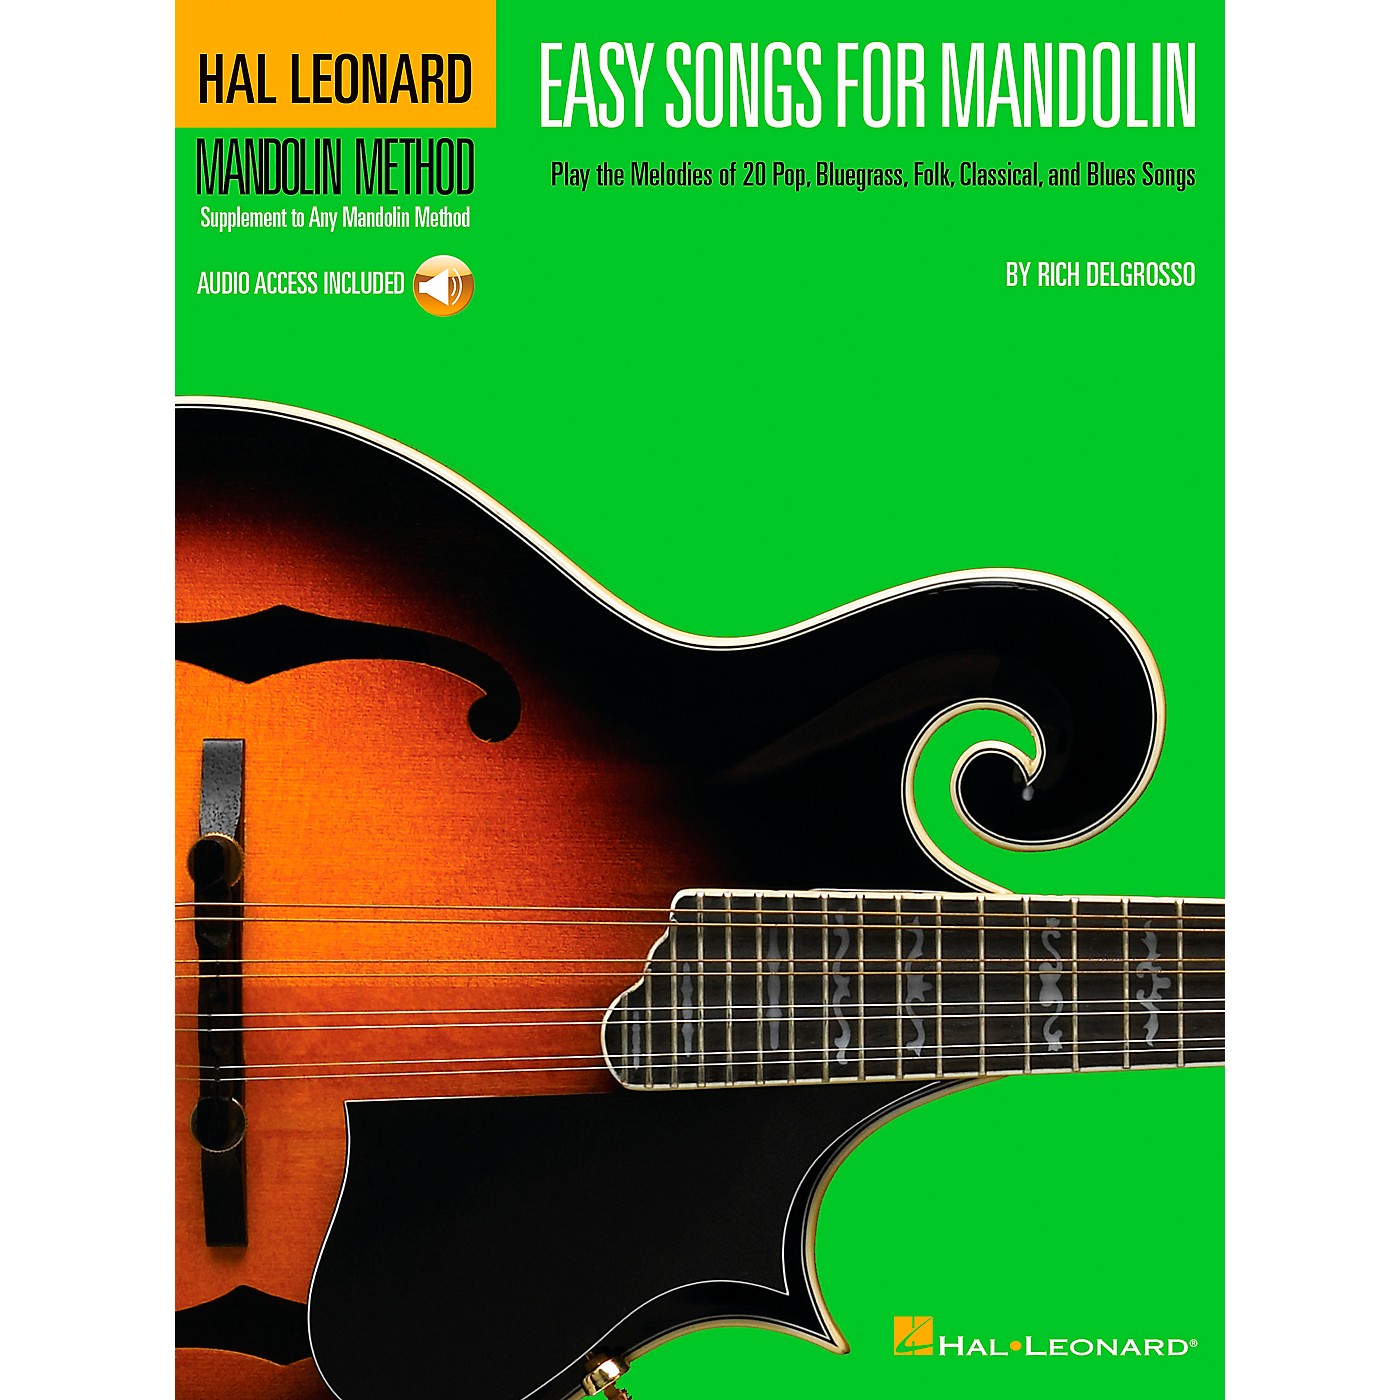 Hal Leonard Easy Songs for Mandolin Tab Book with CD Method Supplement thumbnail